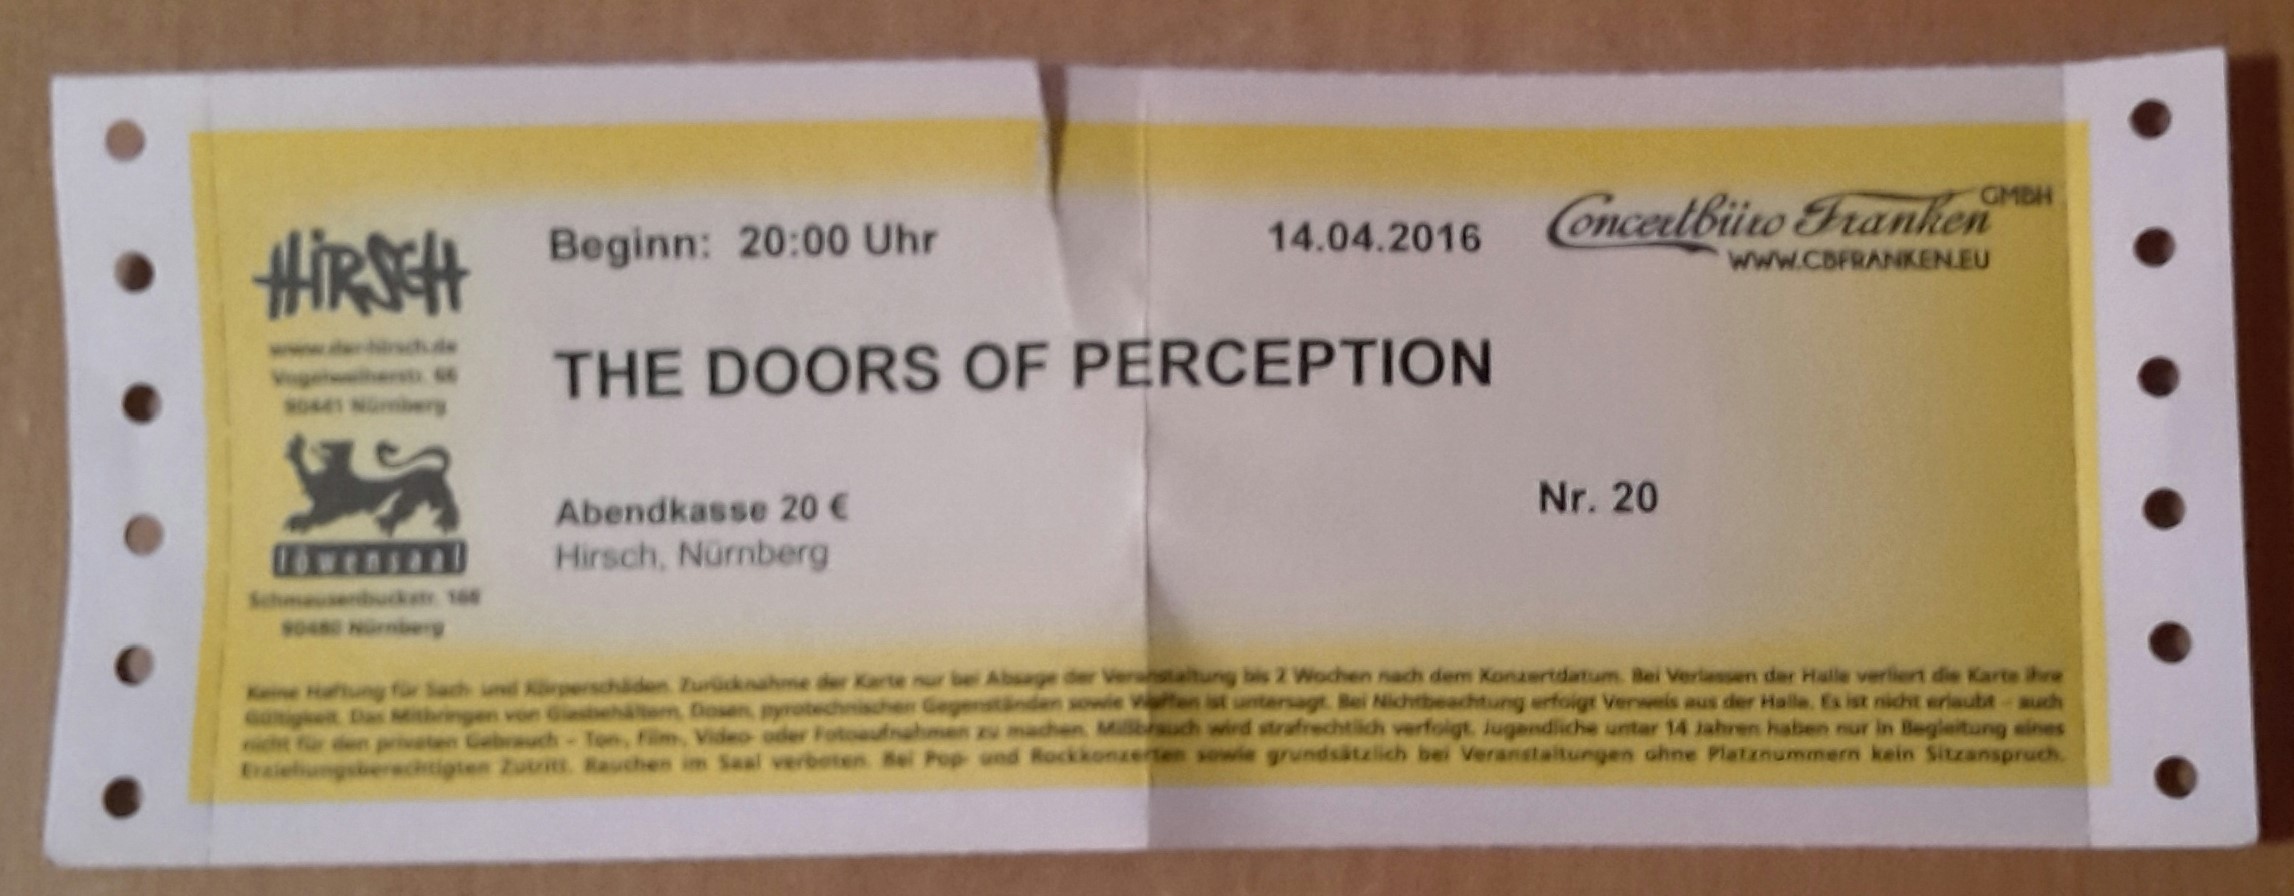 DoorsOfPerception2016-04-14HirschNuernbergGermany (3).jpg